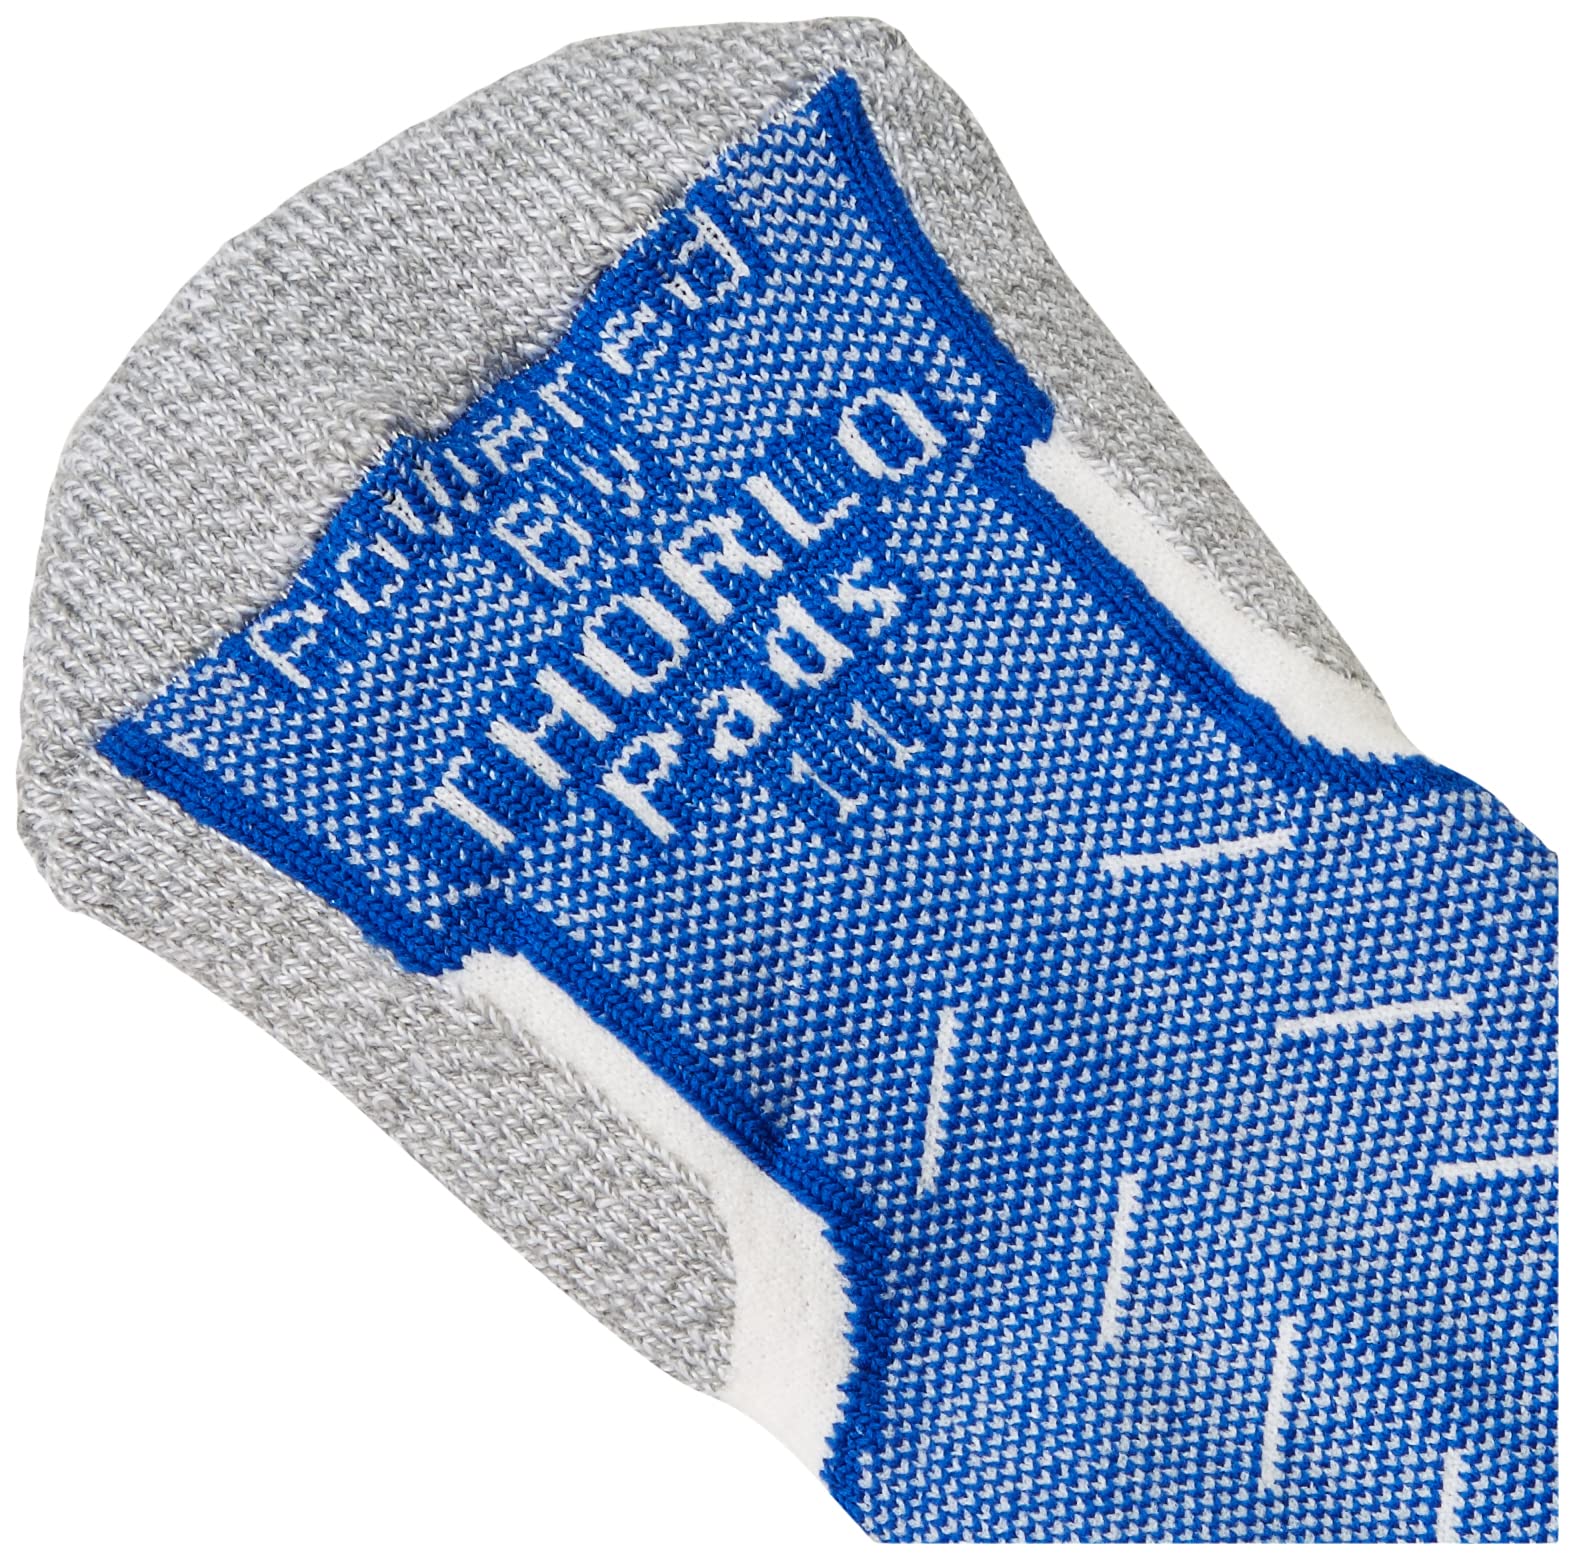 thorlos Experia Multi-Sport Thin Padded Low Cut 3 Pair Pack Socks Sockshosiery, Royal, Medium